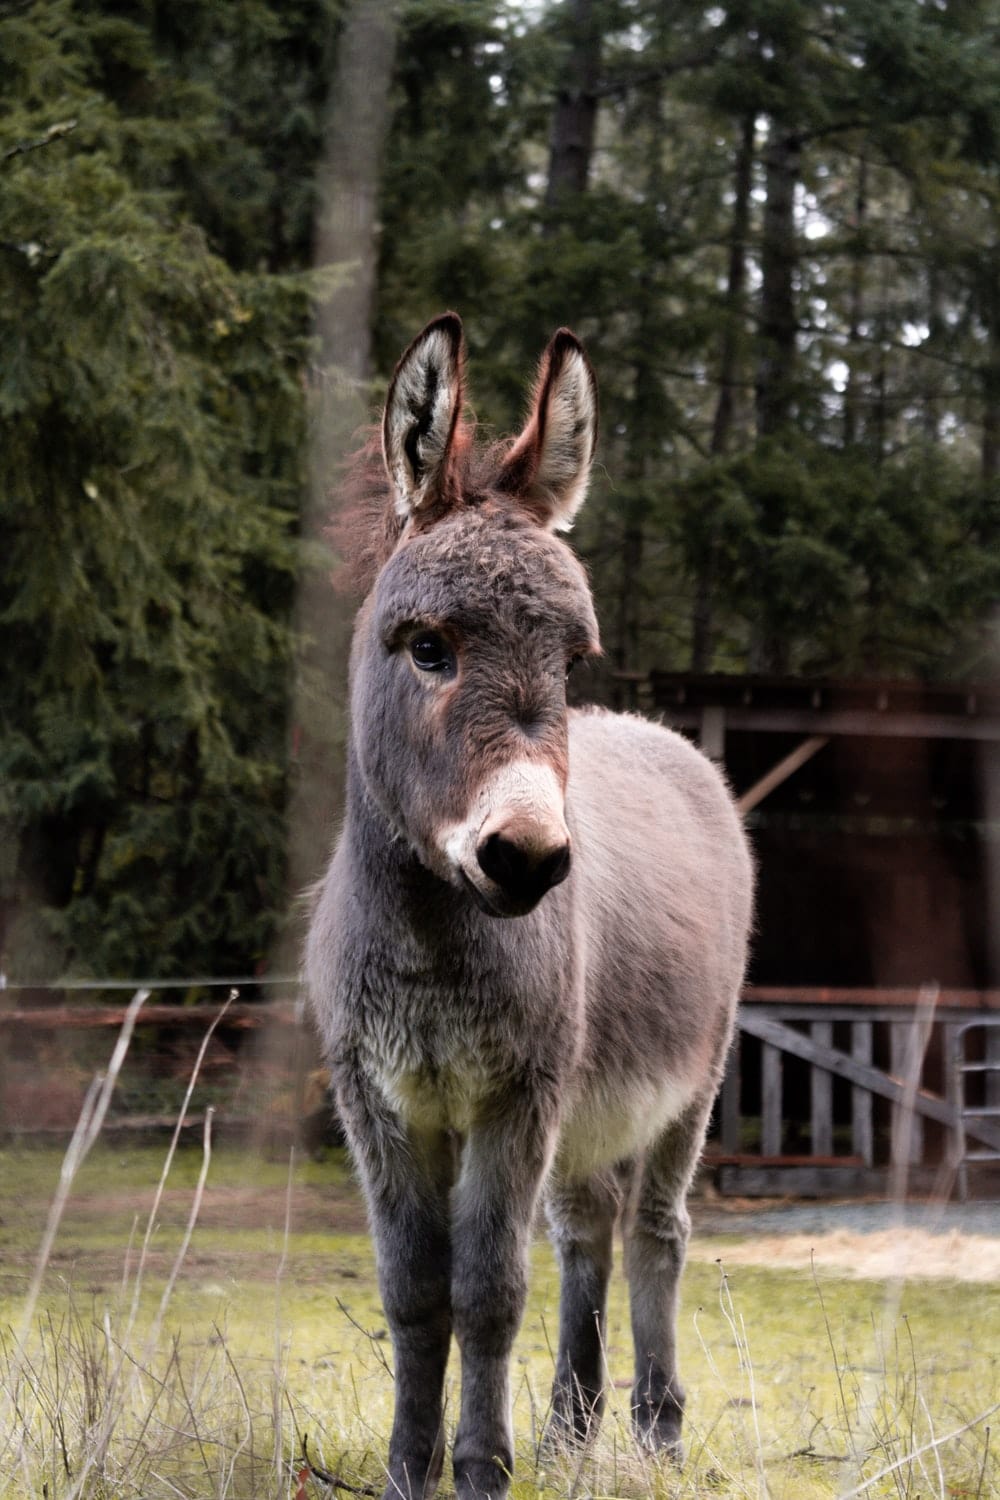 Cross Stitch | Mule - Gray Donkey On Green Grass Field During Daytime - Cross Stitched